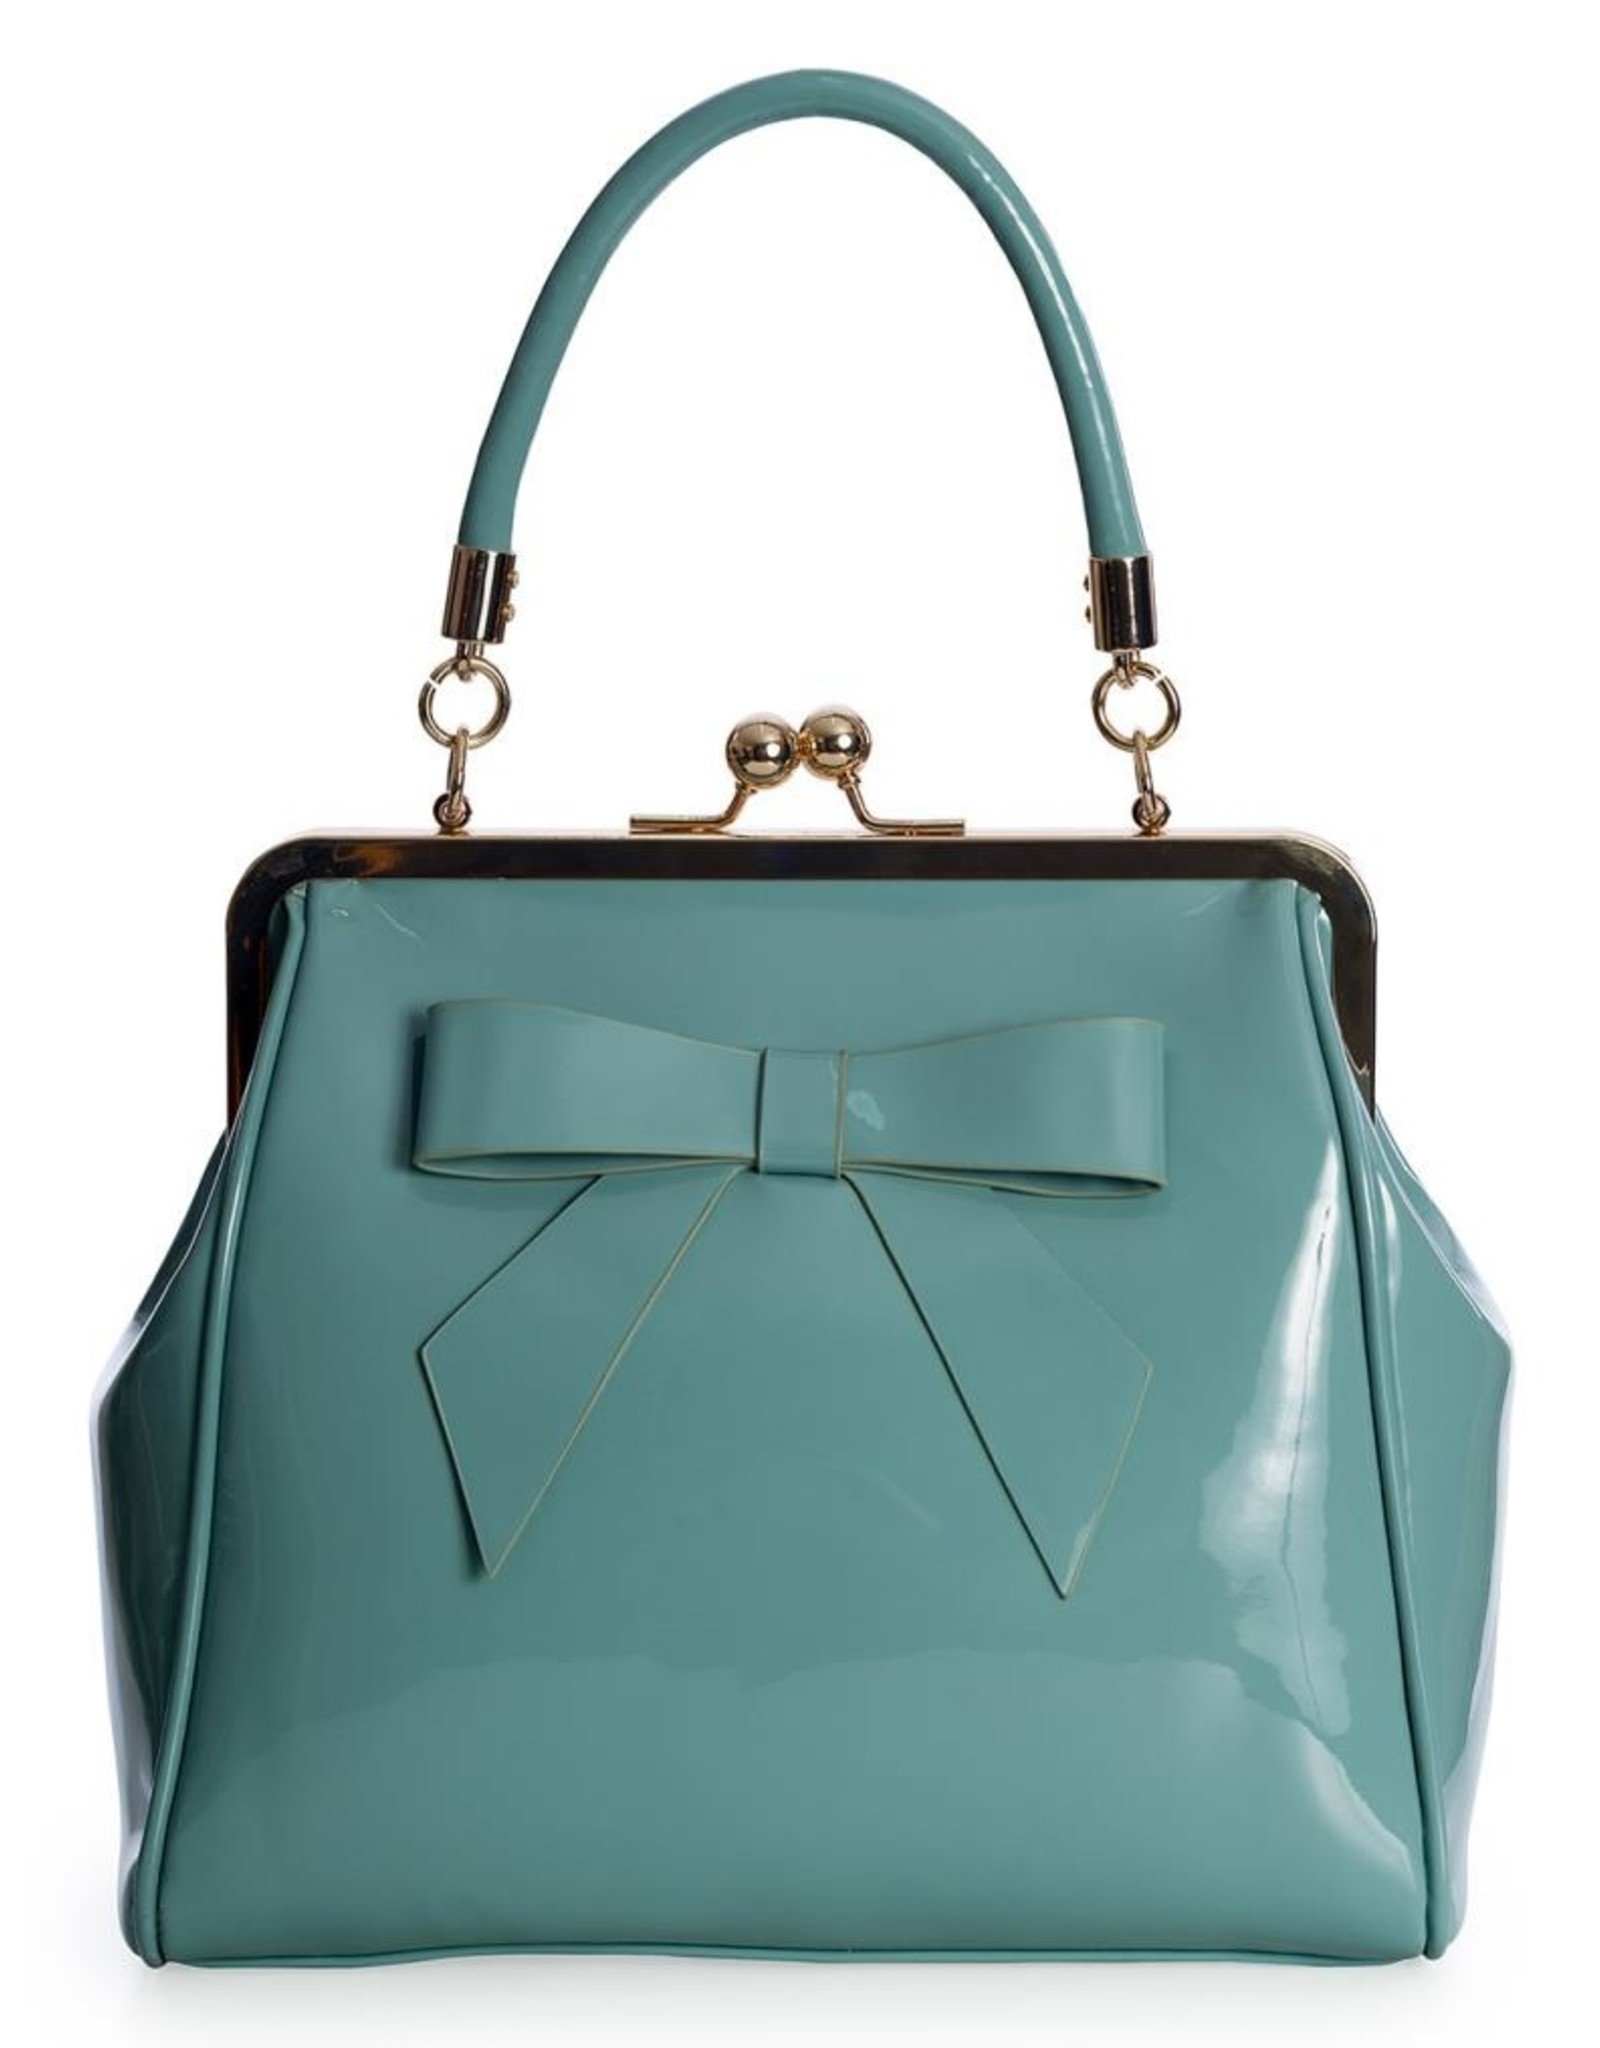 Banned Vintage bags Retro bags - Banned handbag American Vintage (turquoise)